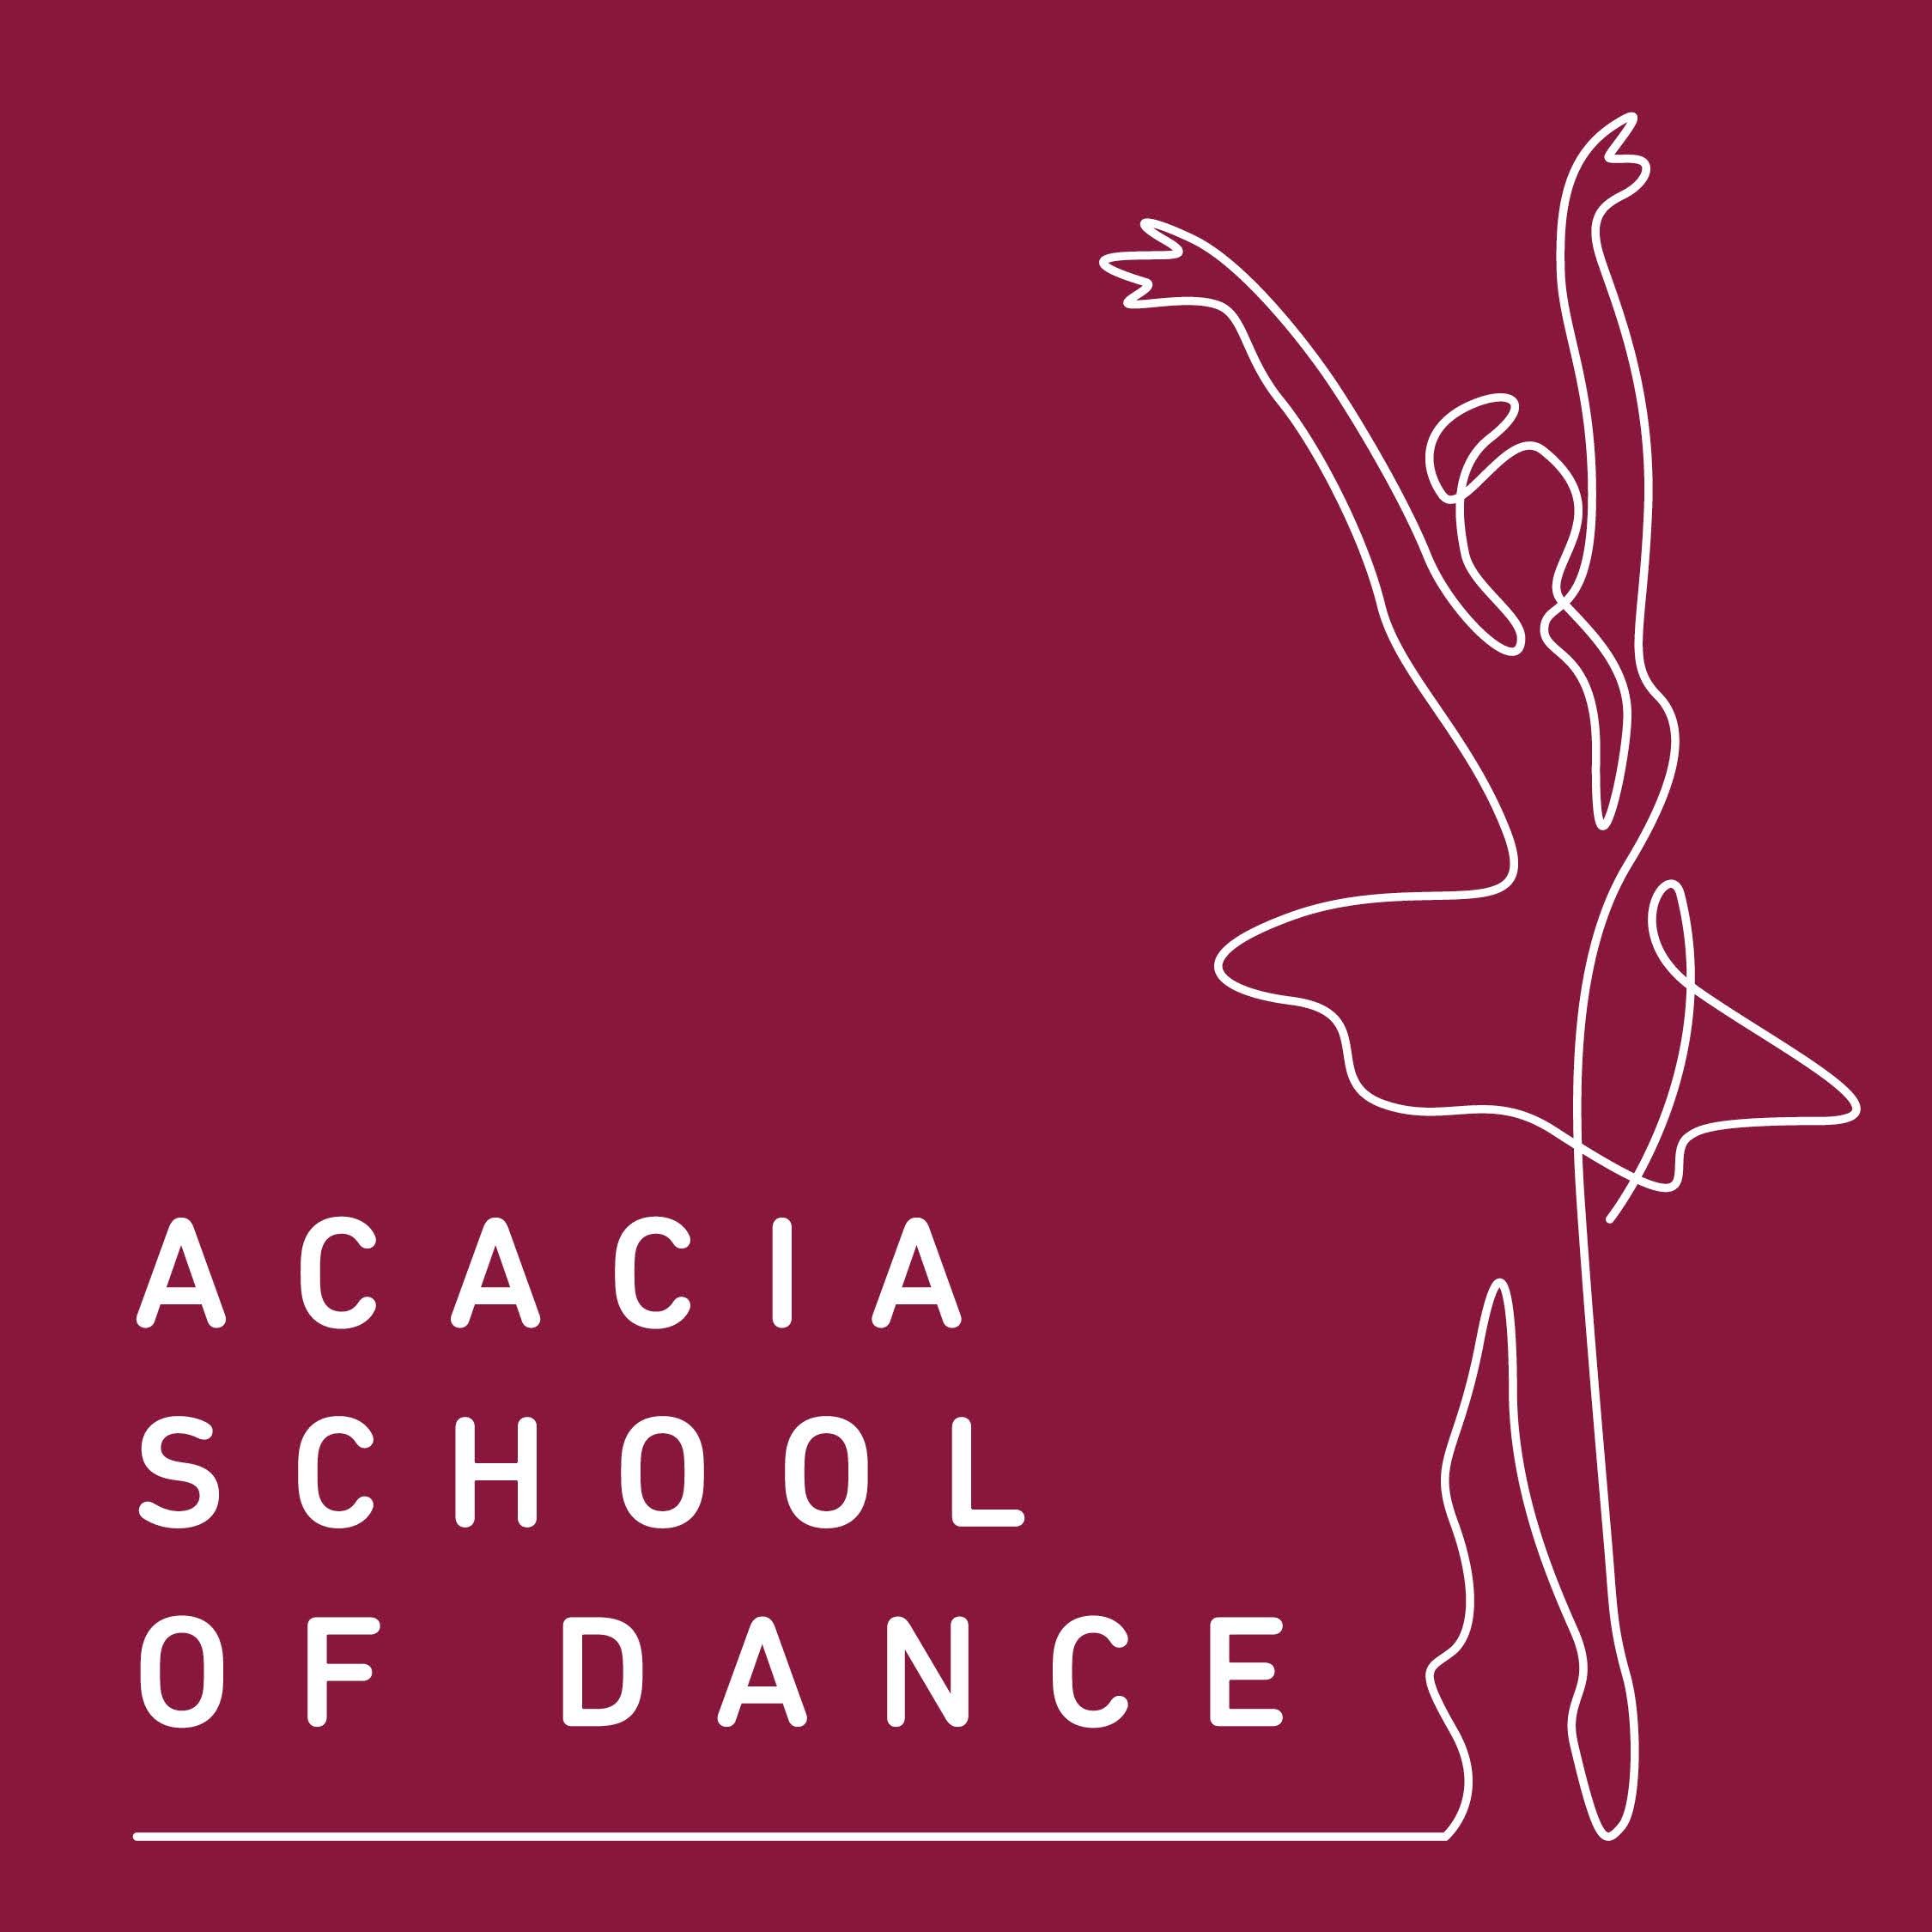 Acacia School of Dance logo